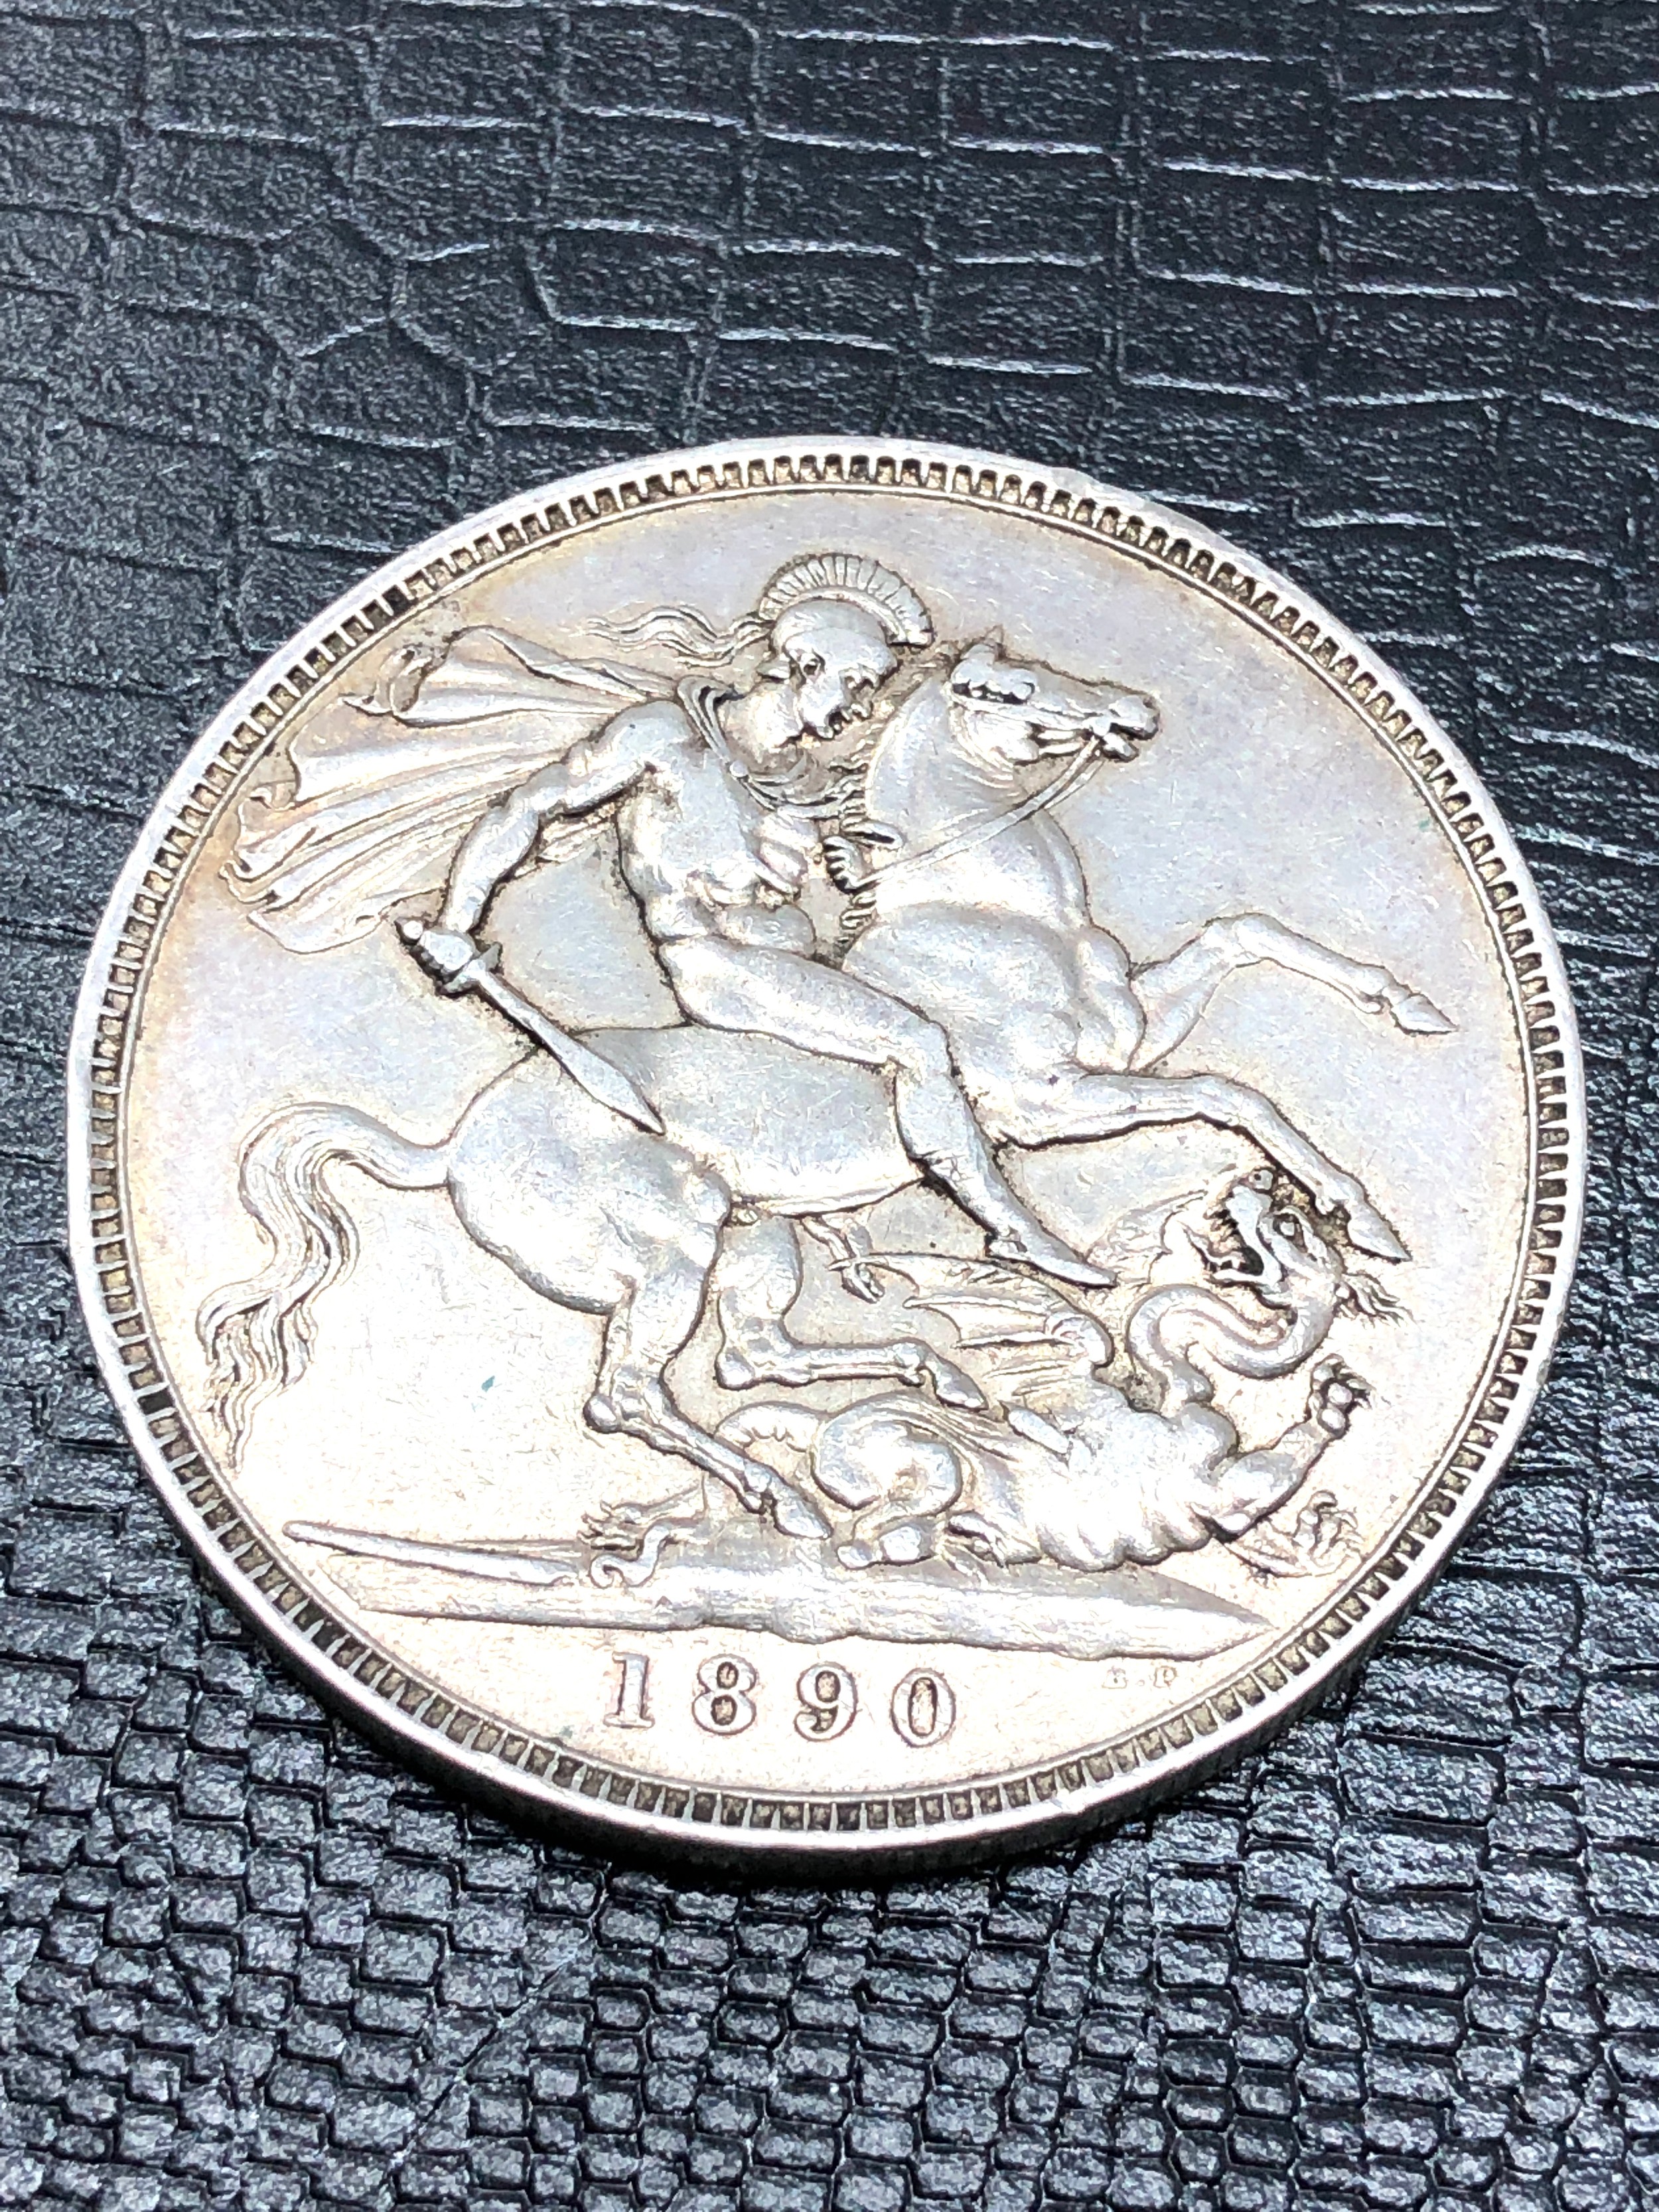 1890 Queen Victoria Silver Crown - Image 2 of 2